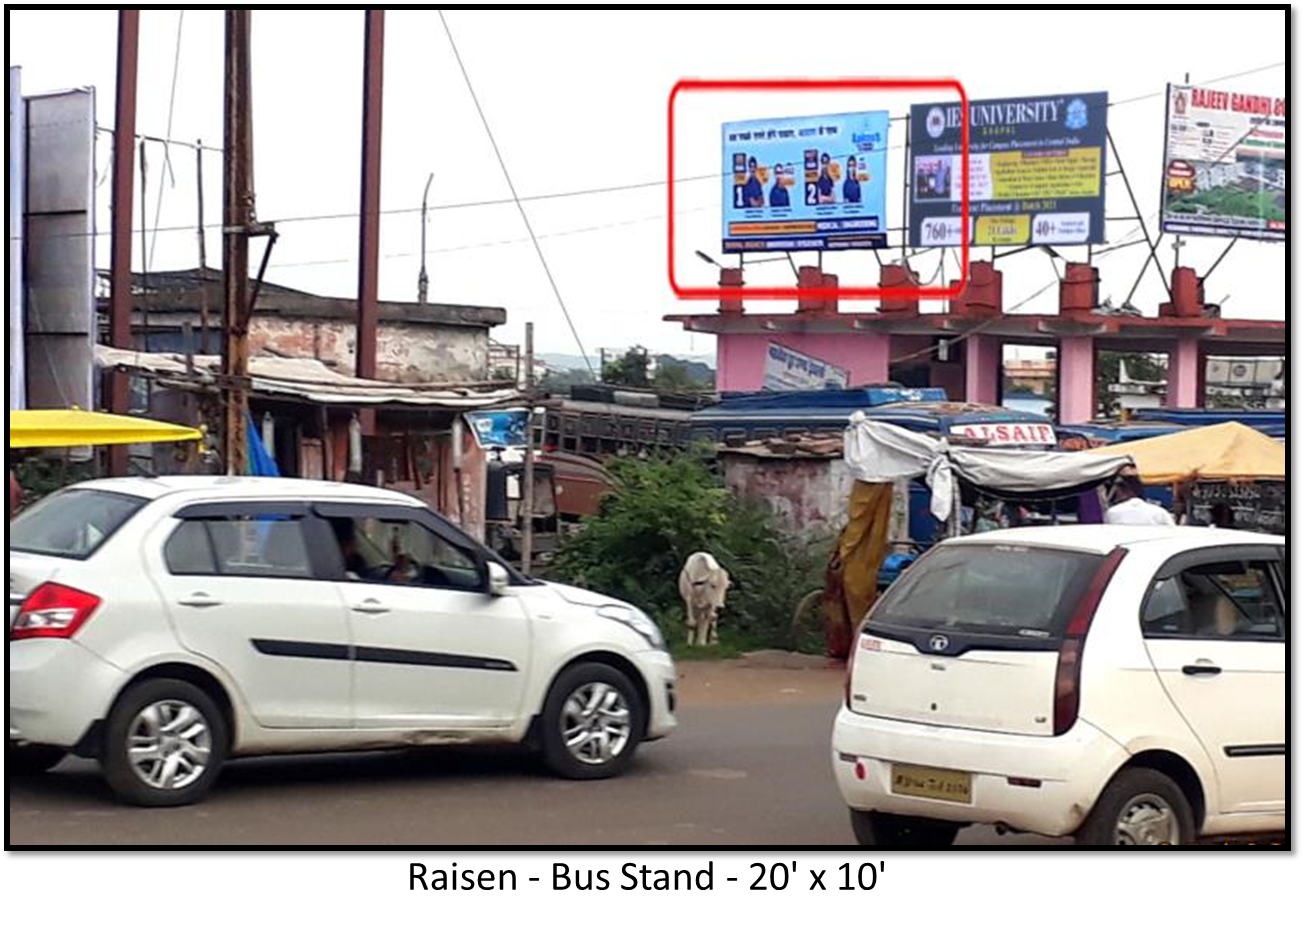 Billboard - Bus station, Raisen, Madhya Pradesh